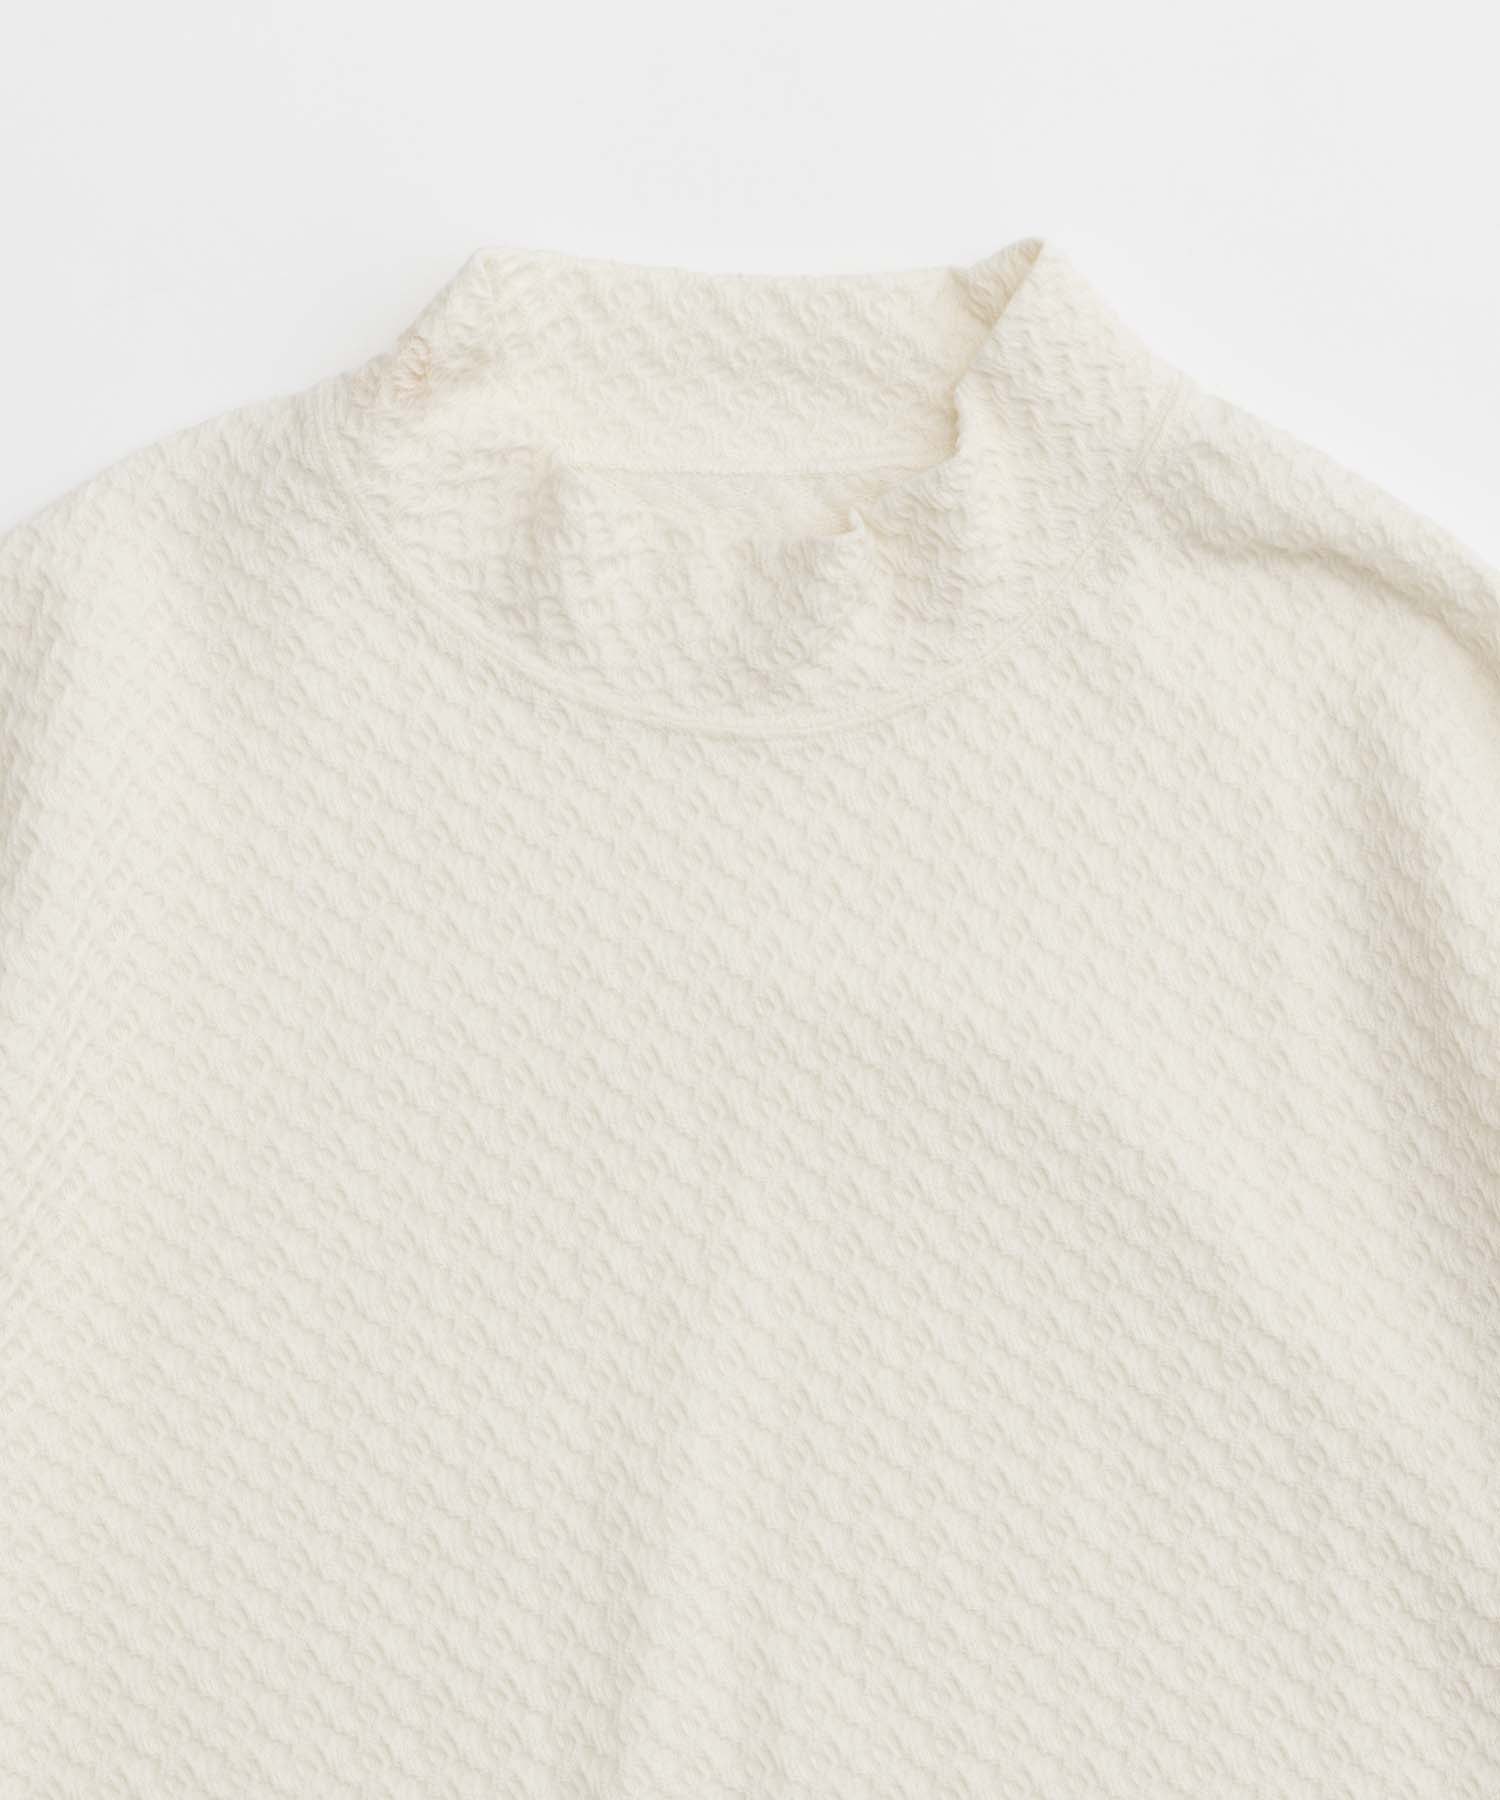 【SALE】Shirring Jacquard Prime-Over Mock Neck Long Sleeve T-Shirt